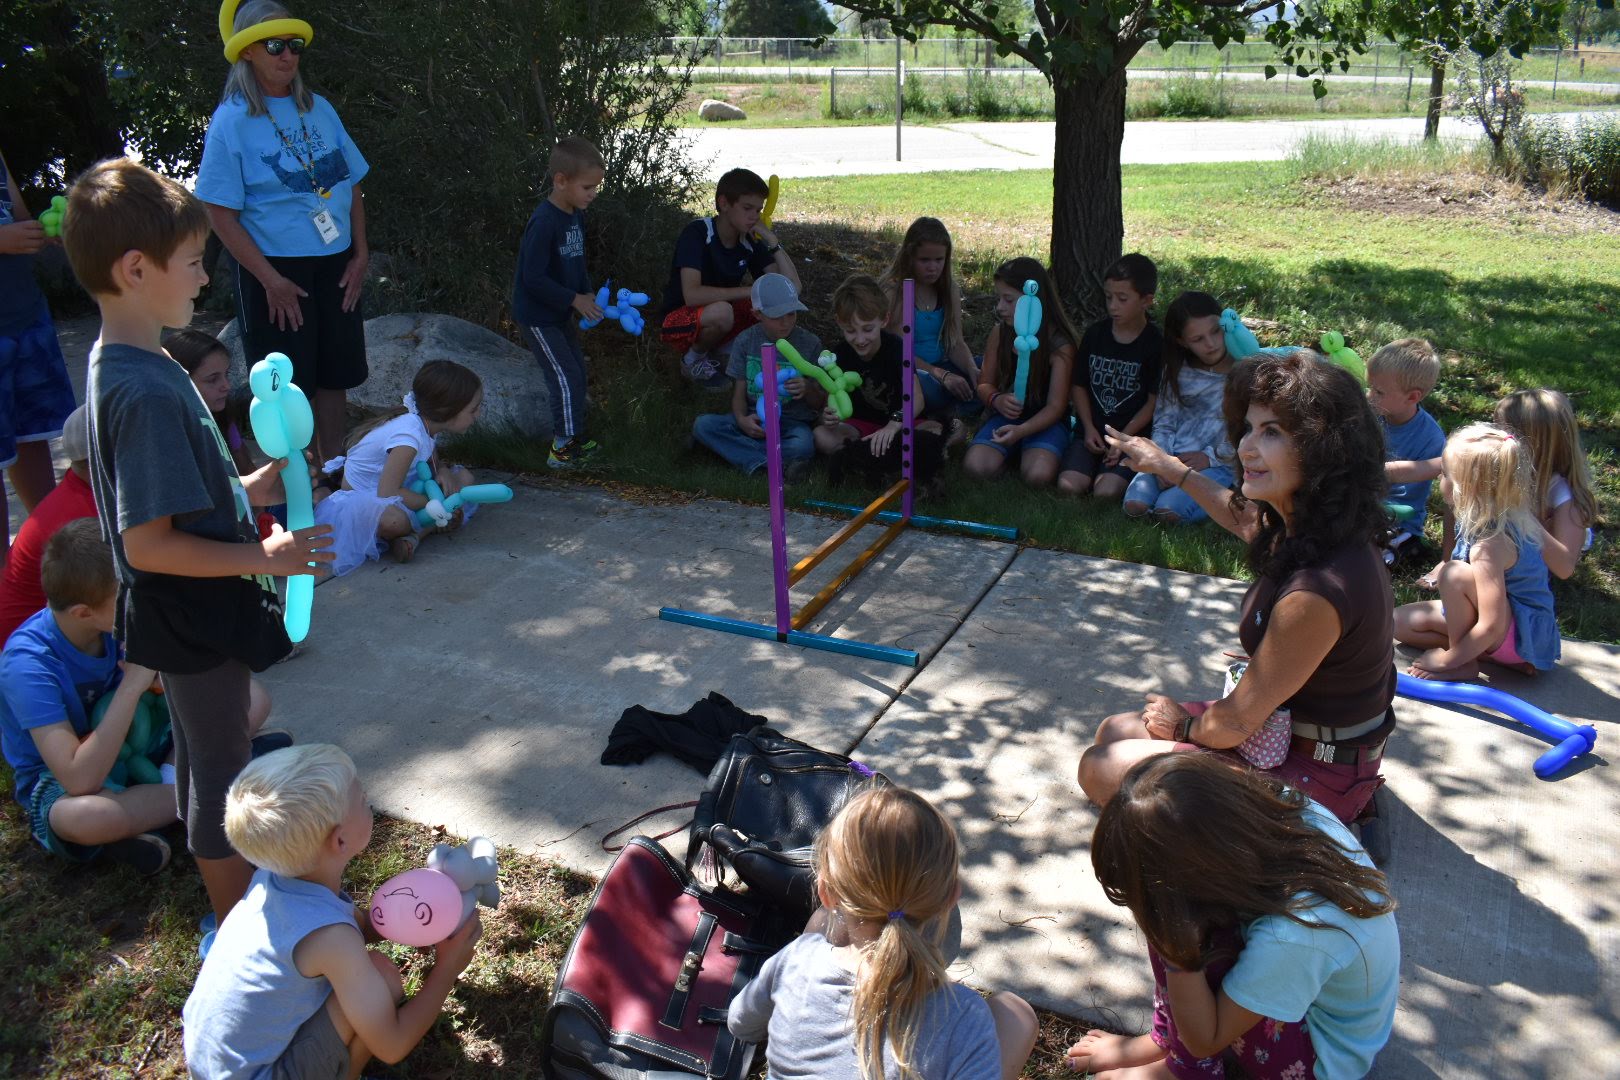 Children enjoy summer reading activities outdoors.